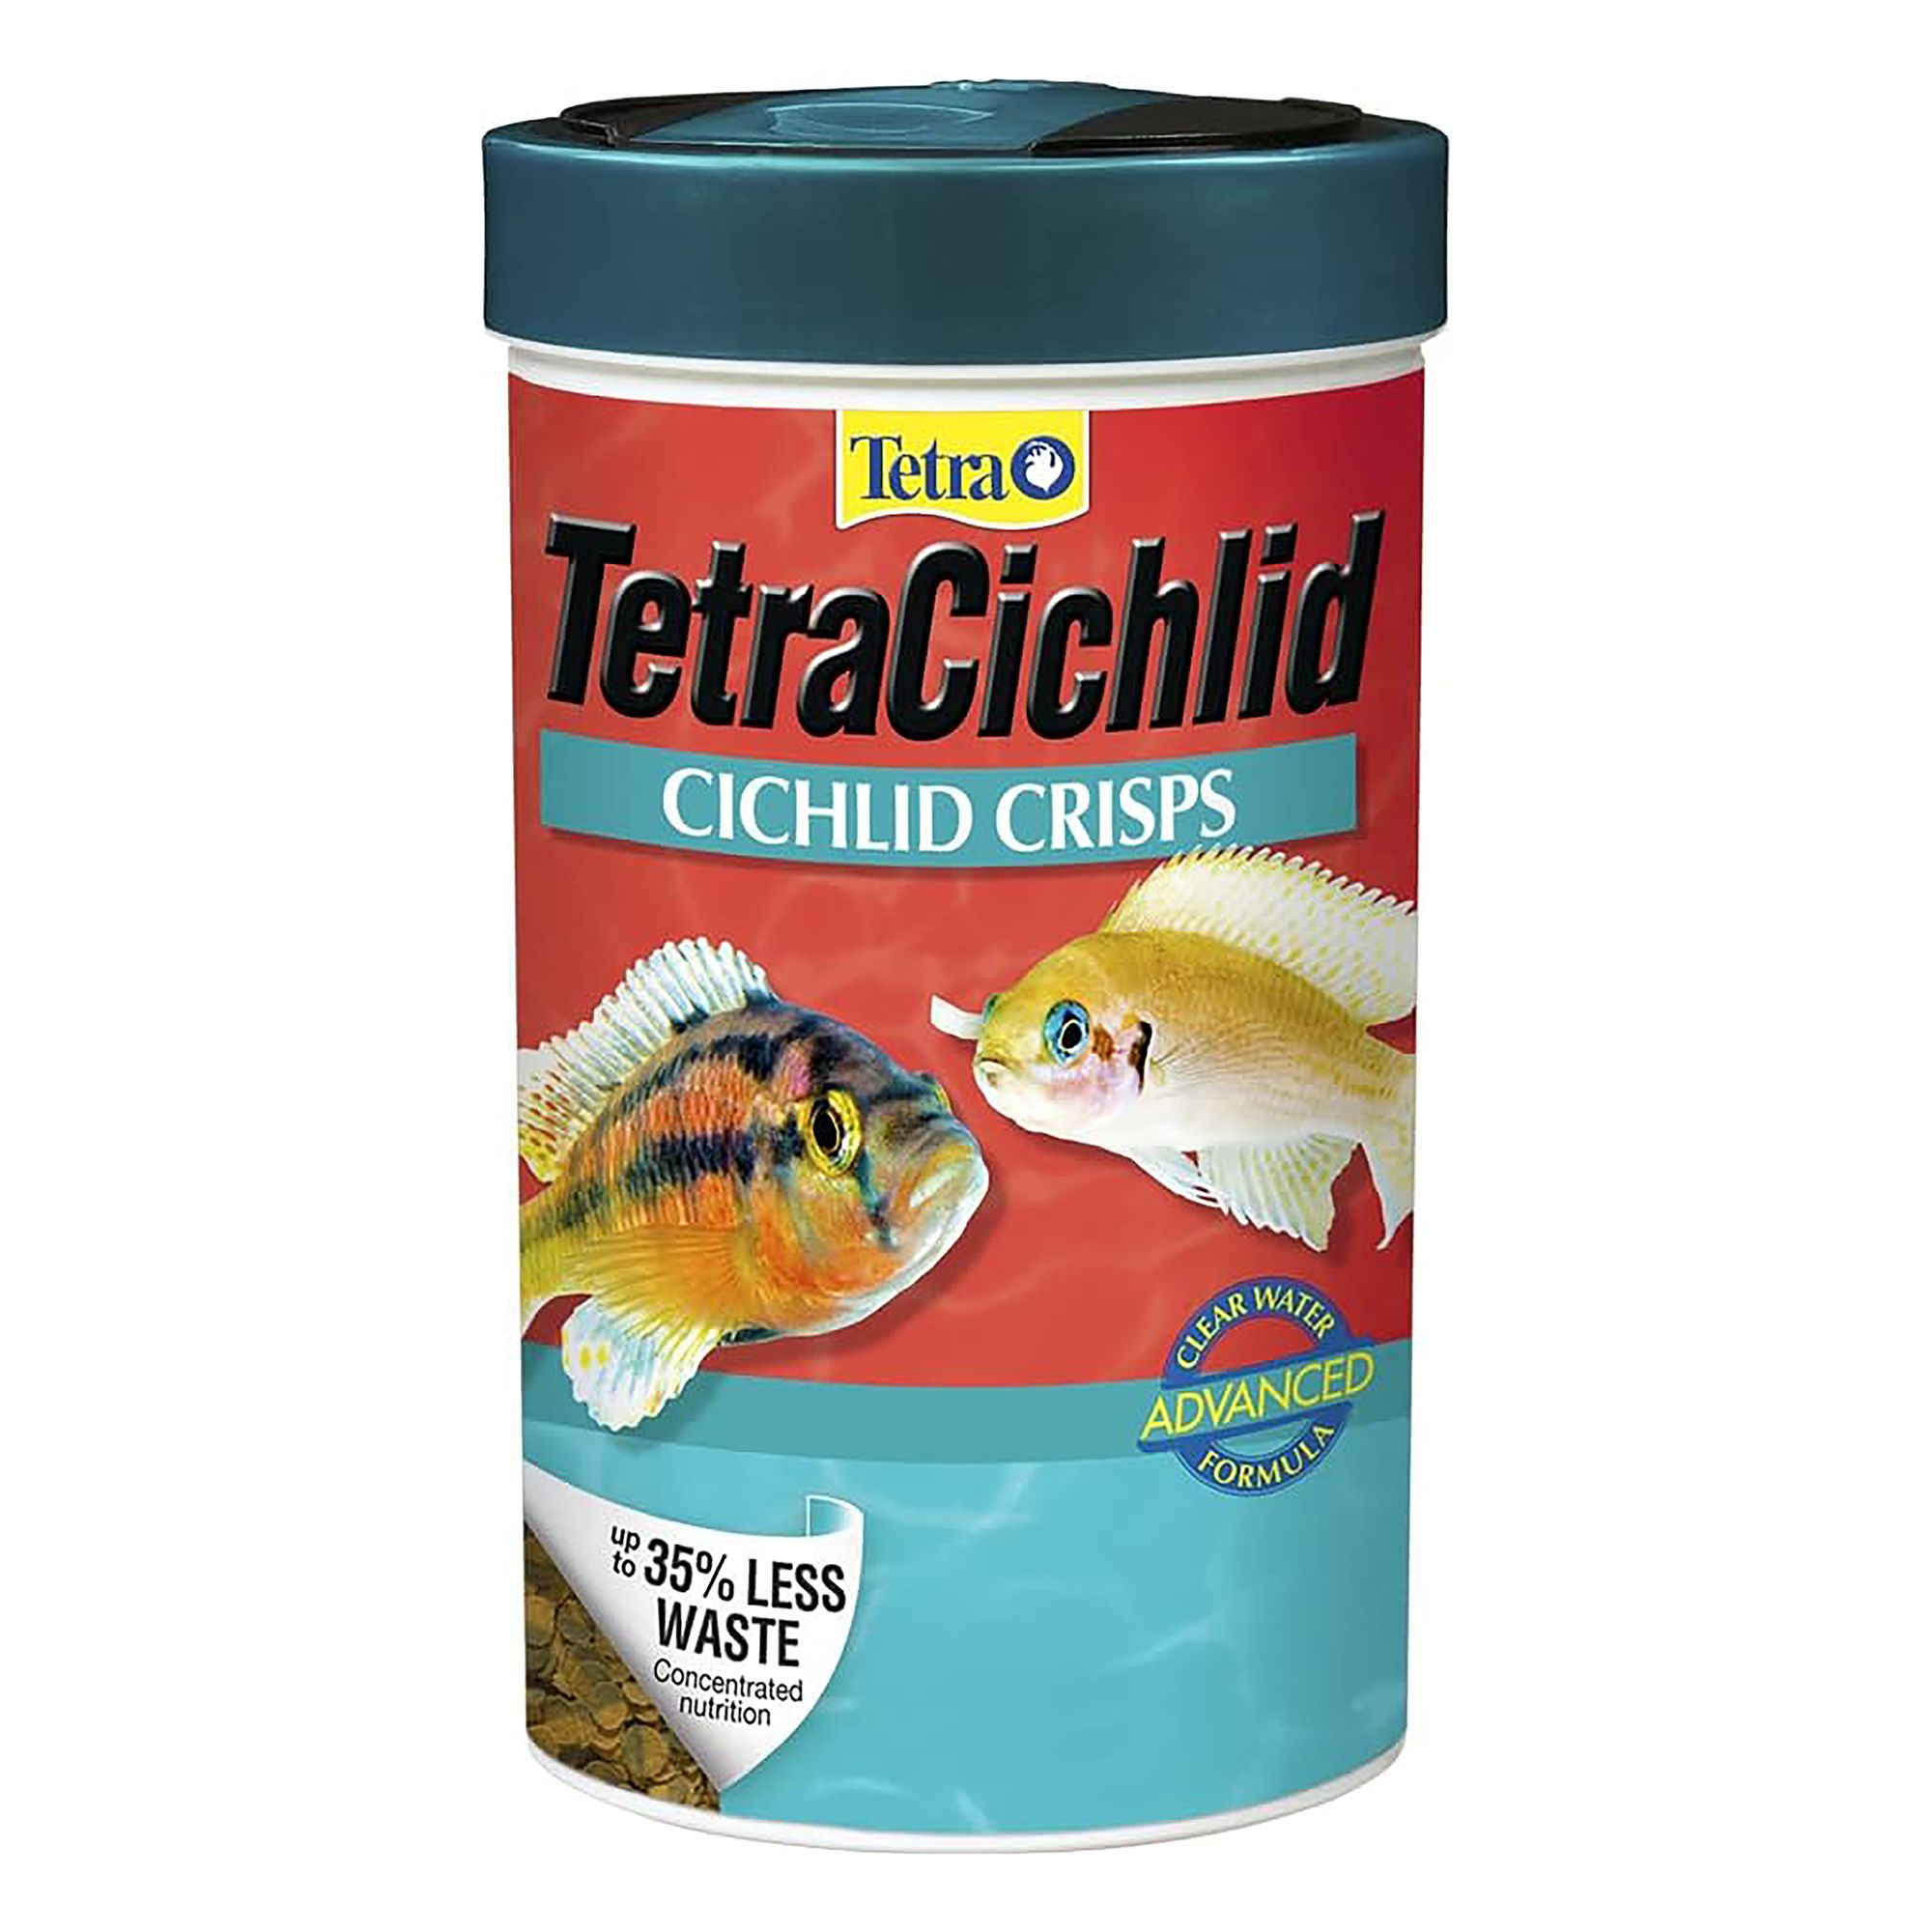 Tetra® TetraCichlid Cichlid Crisps Fish Food, fish Food